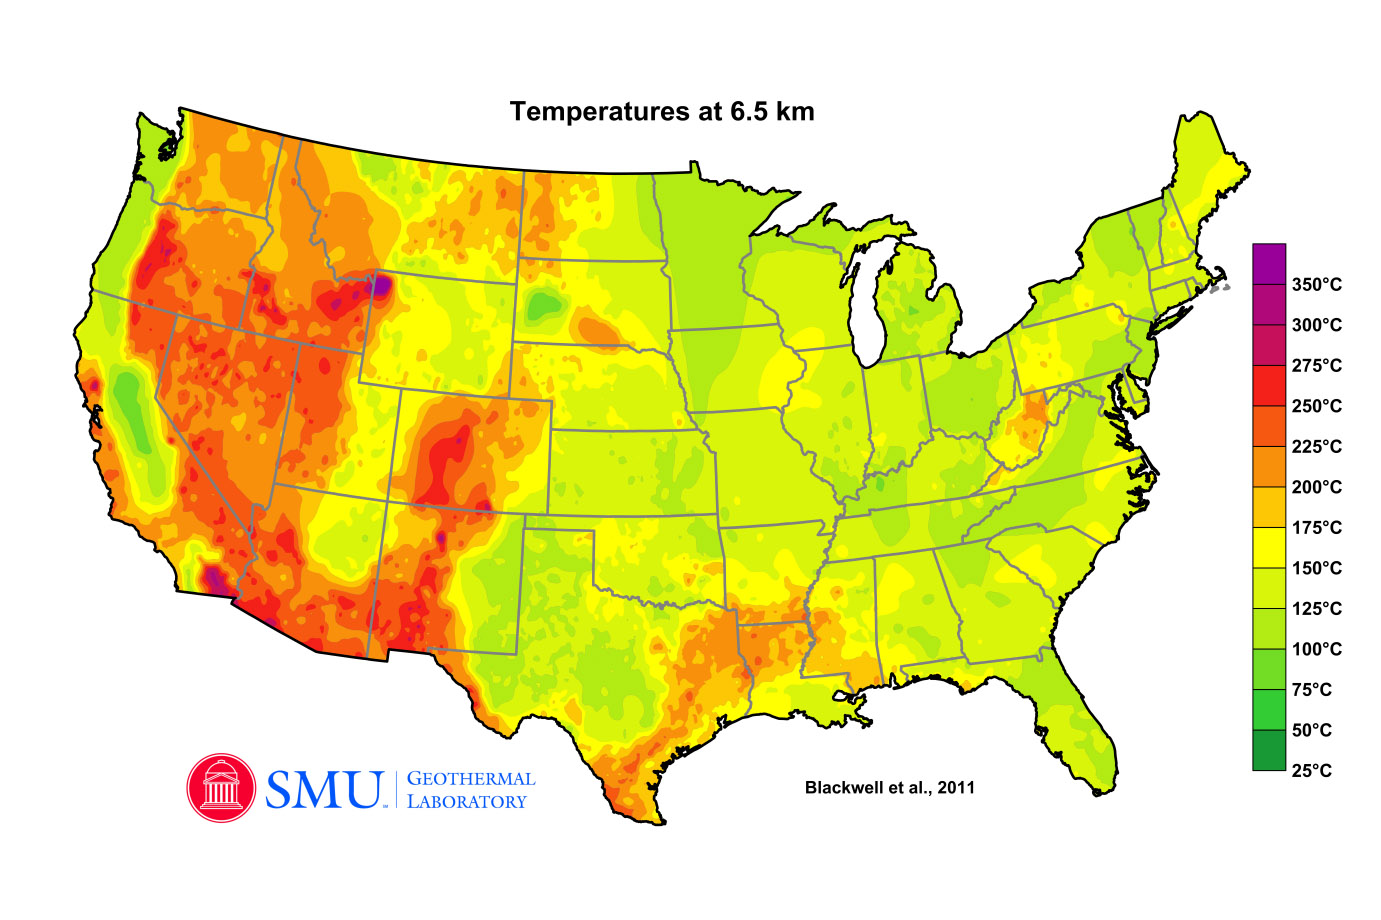 U.S. map of temperatures at 6.5km depth